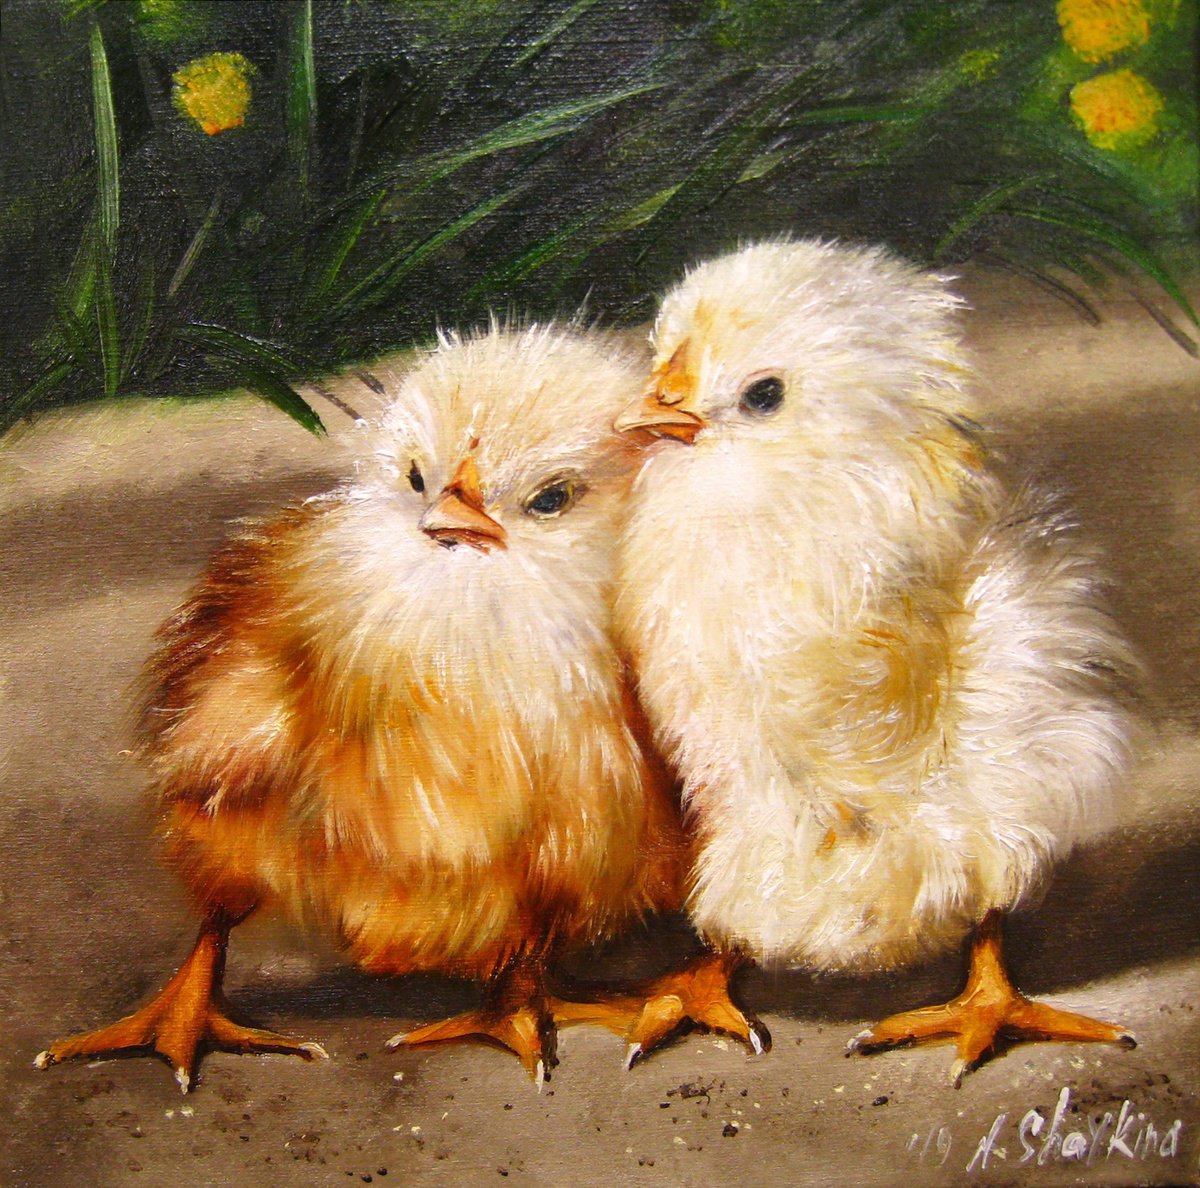 Cute little chickens by Natalia Shaykina